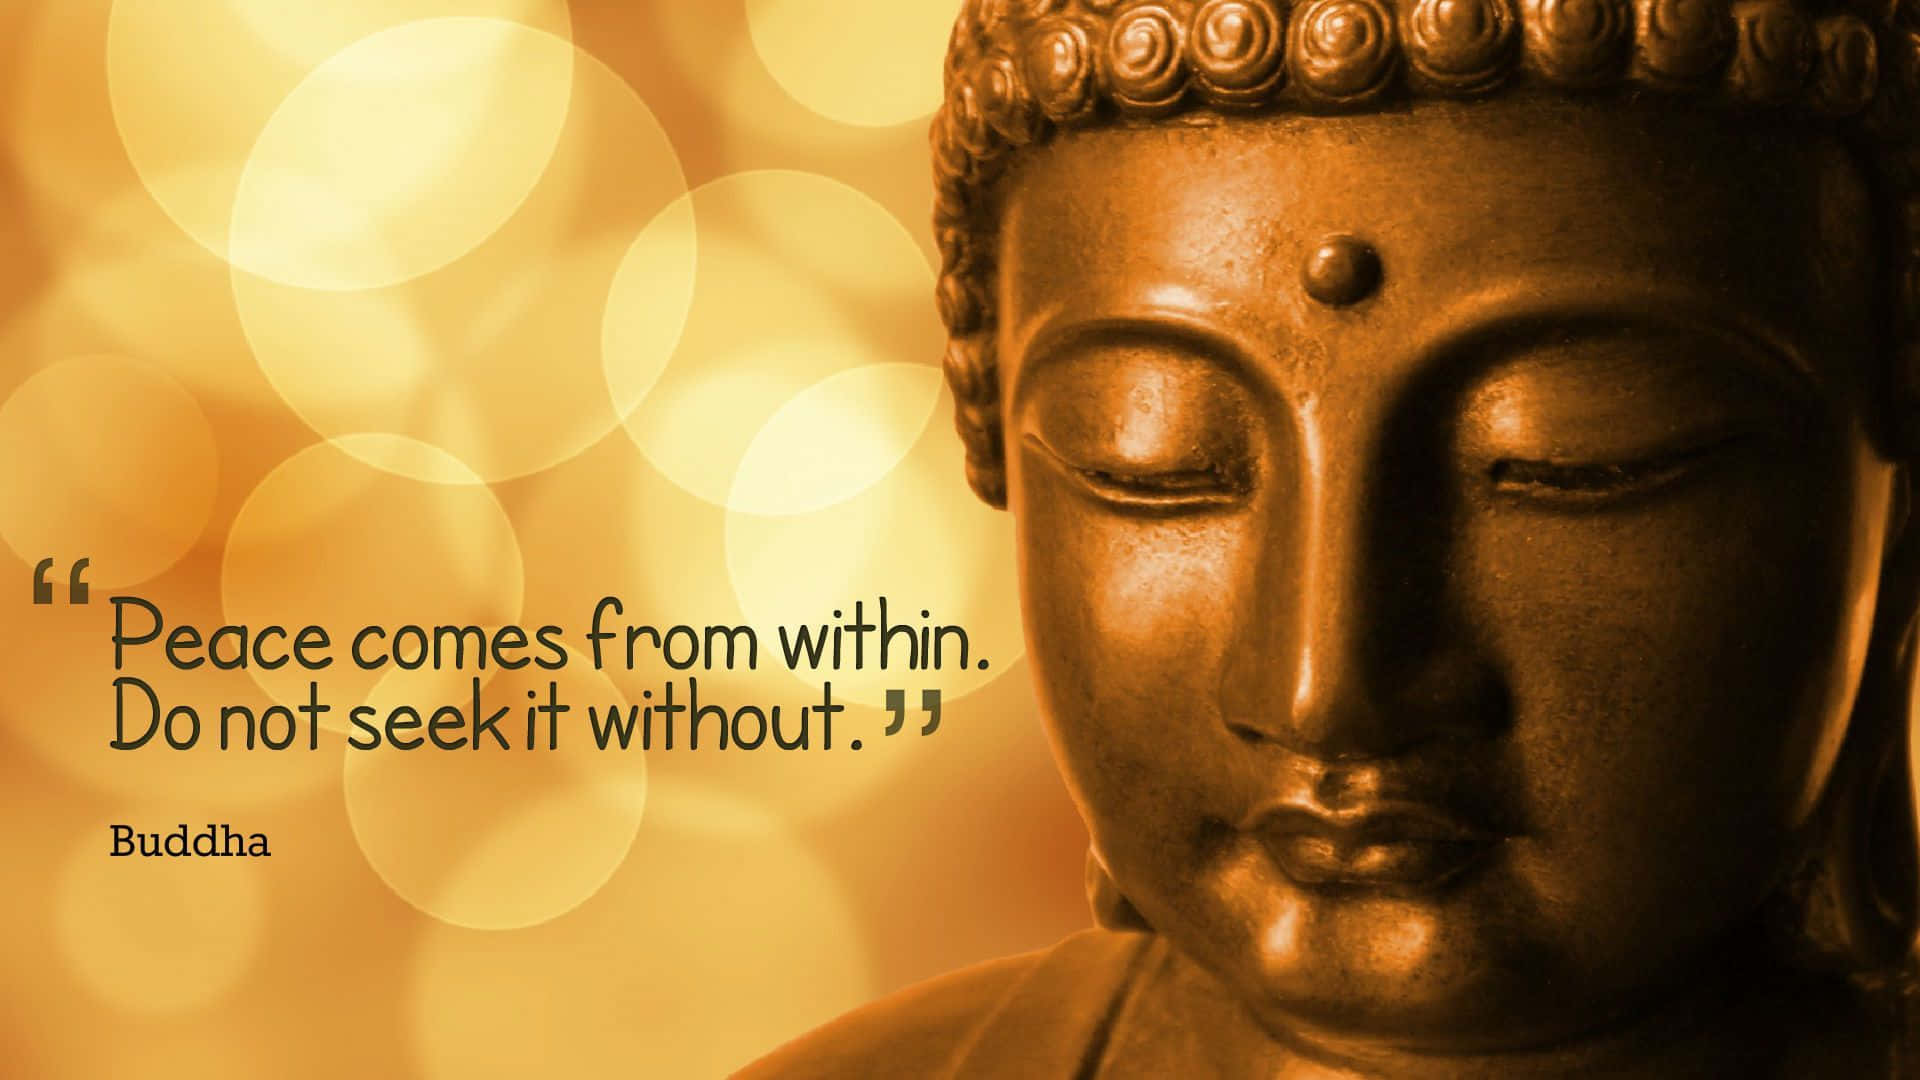 The Enlightened Wisdom of Buddha